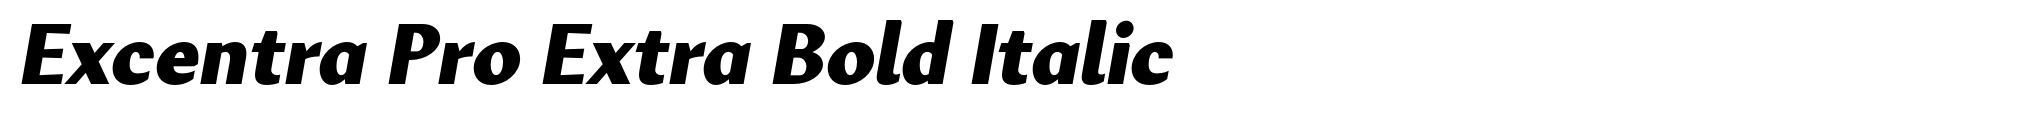 Excentra Pro Extra Bold Italic image